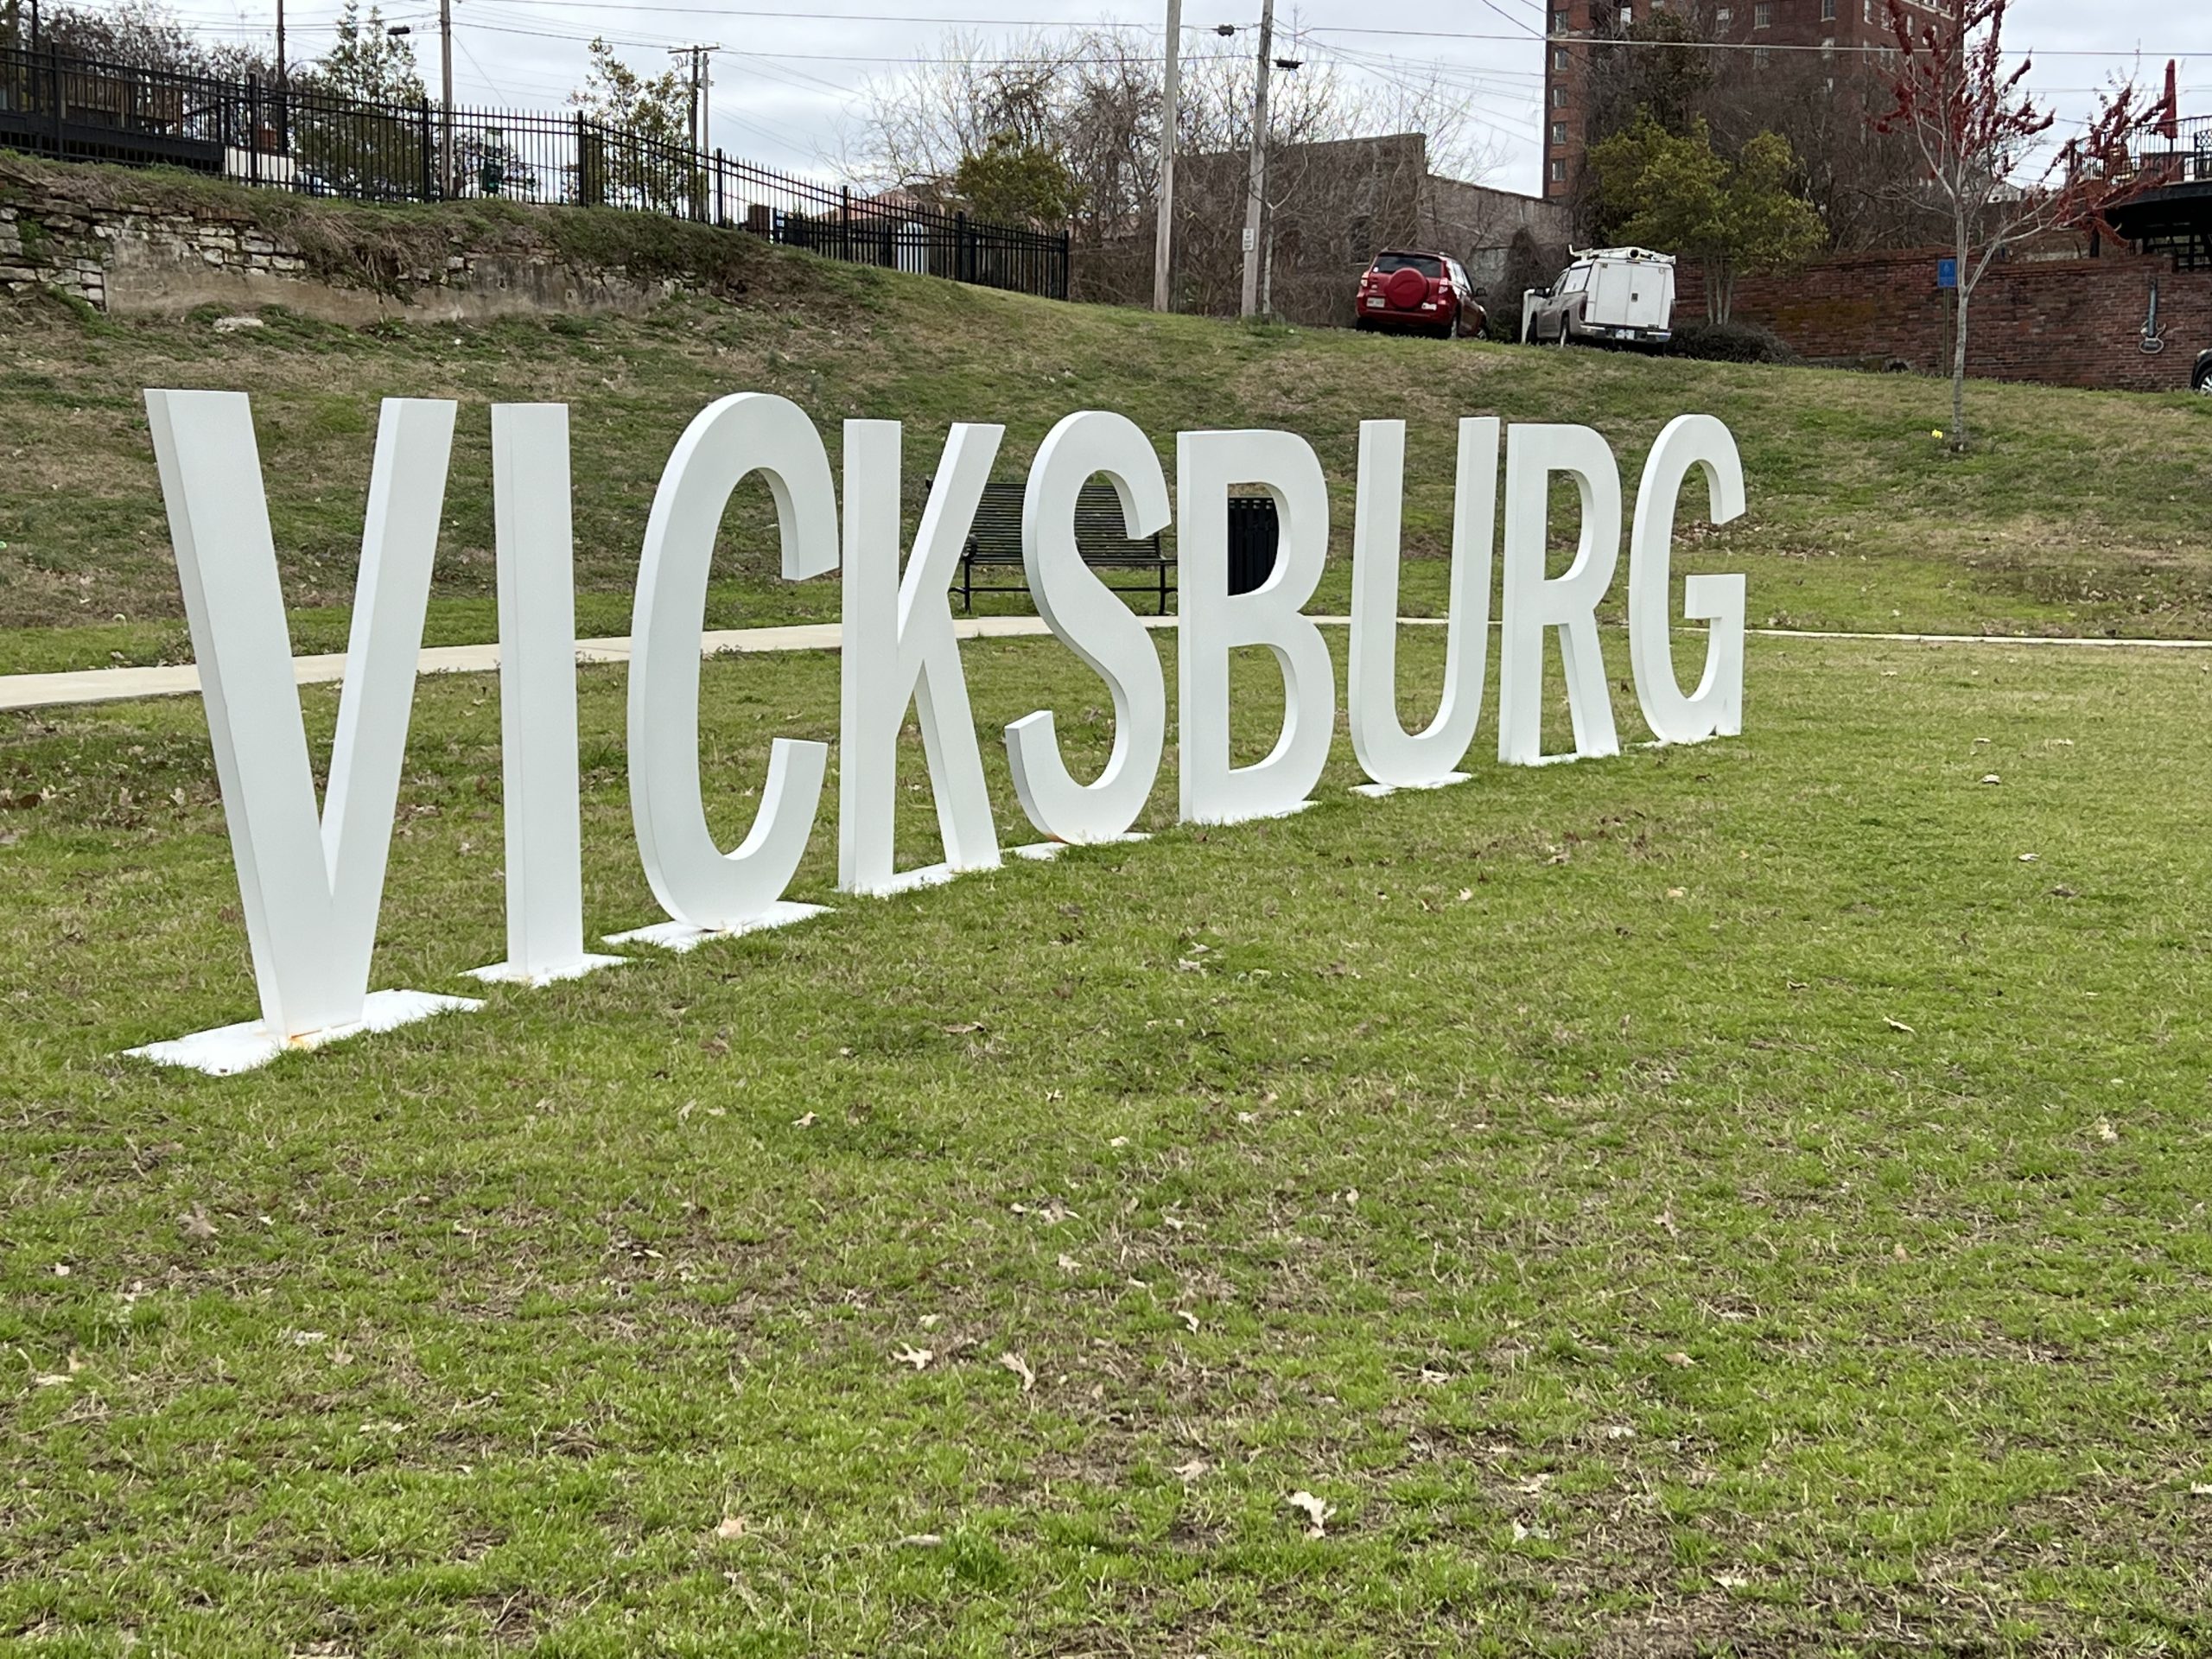 Vicksburg welcome sign